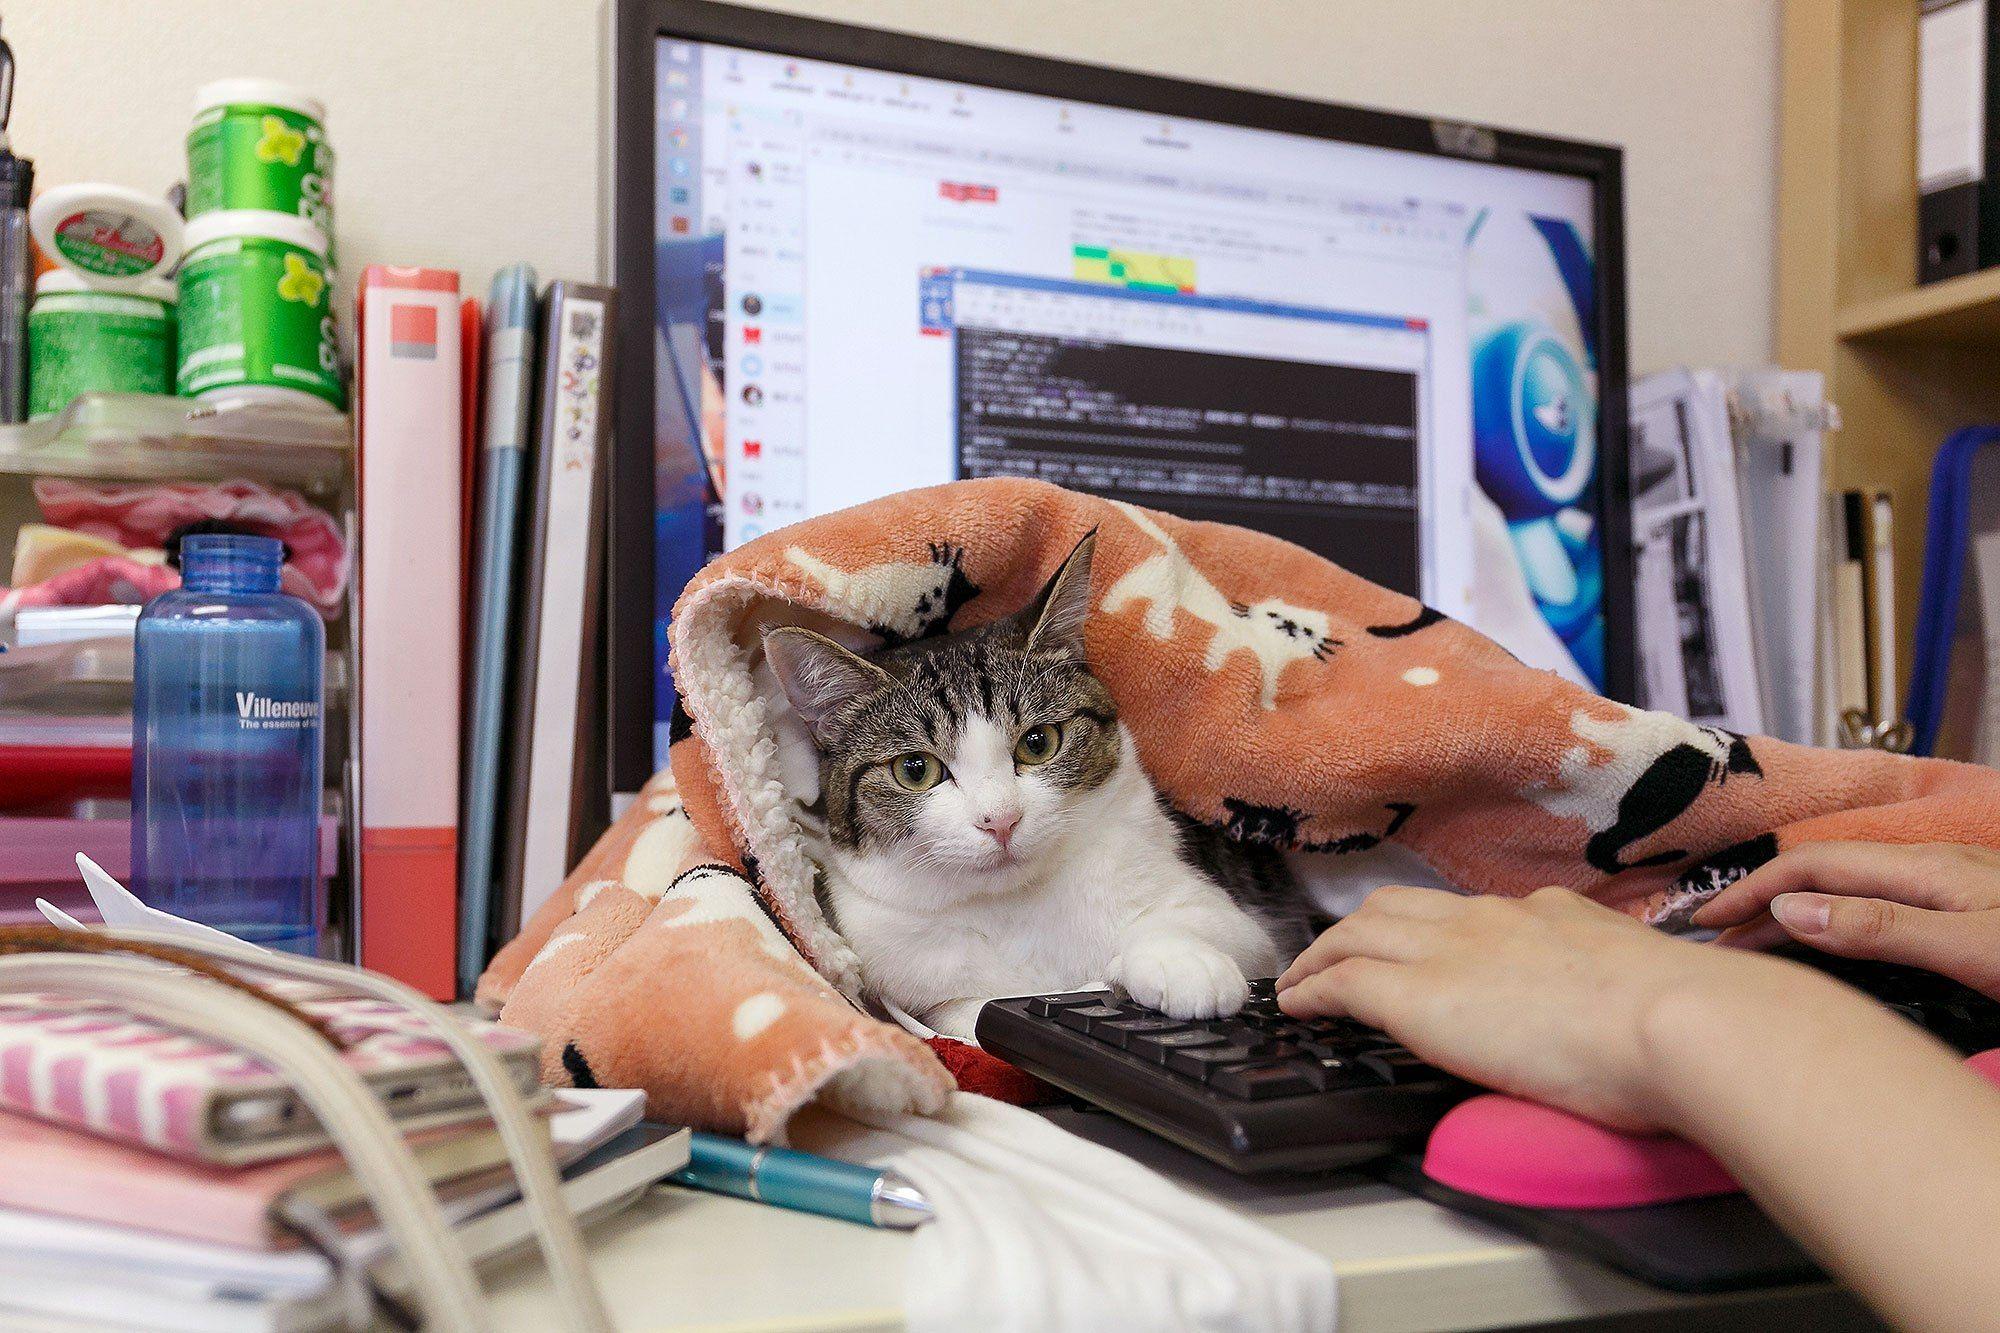 kot w kocu leży na biurku obok komputera"